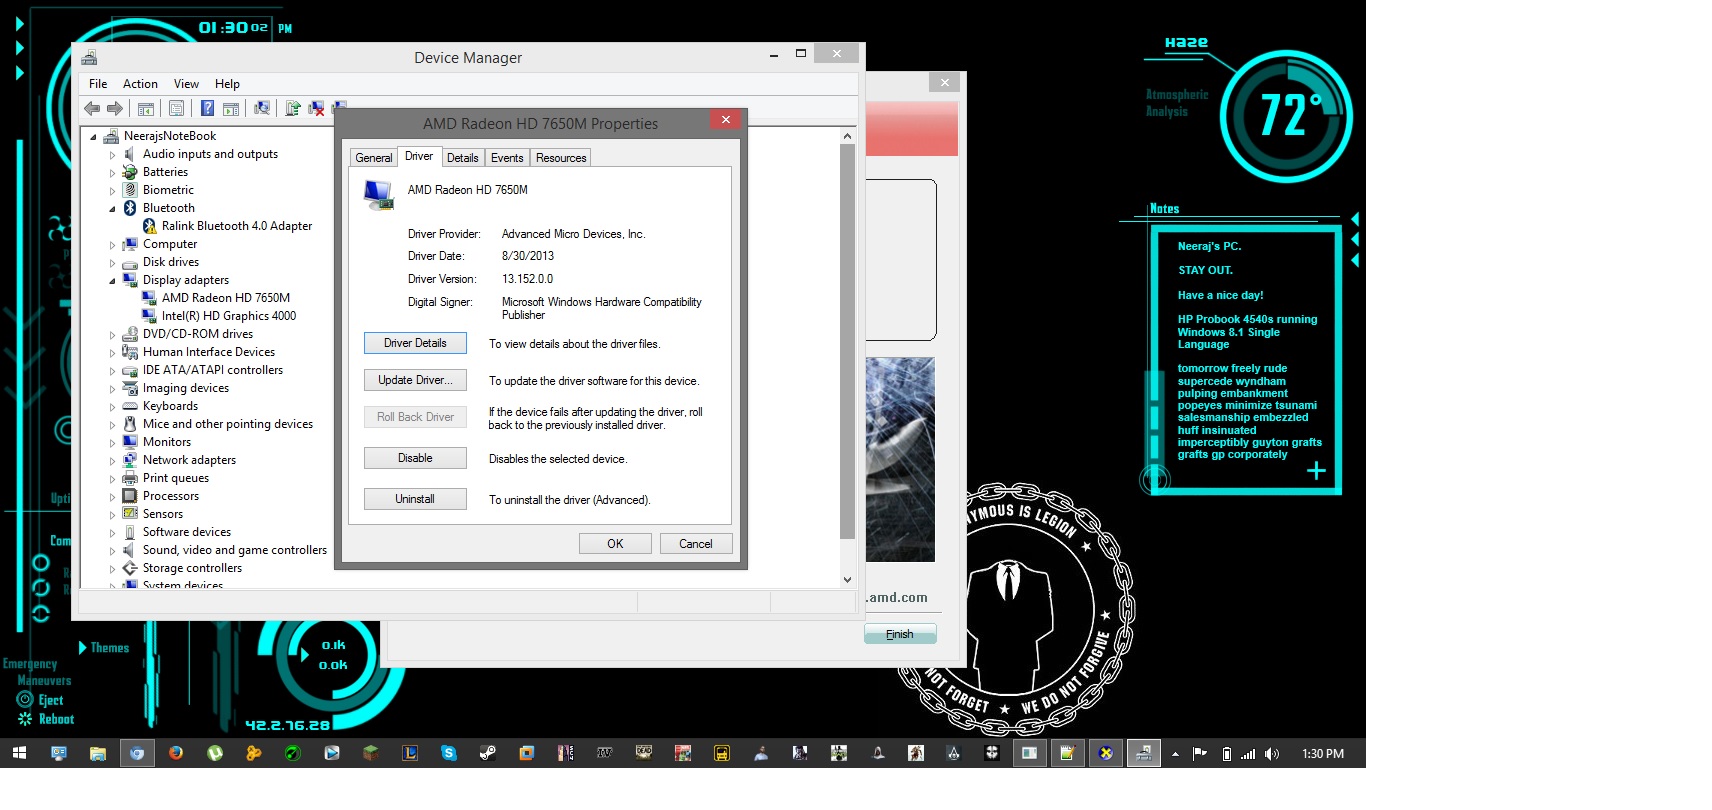 HP ProBook 4540s AMD Display Drivers Install ERROR - HP Support Community -  3421157